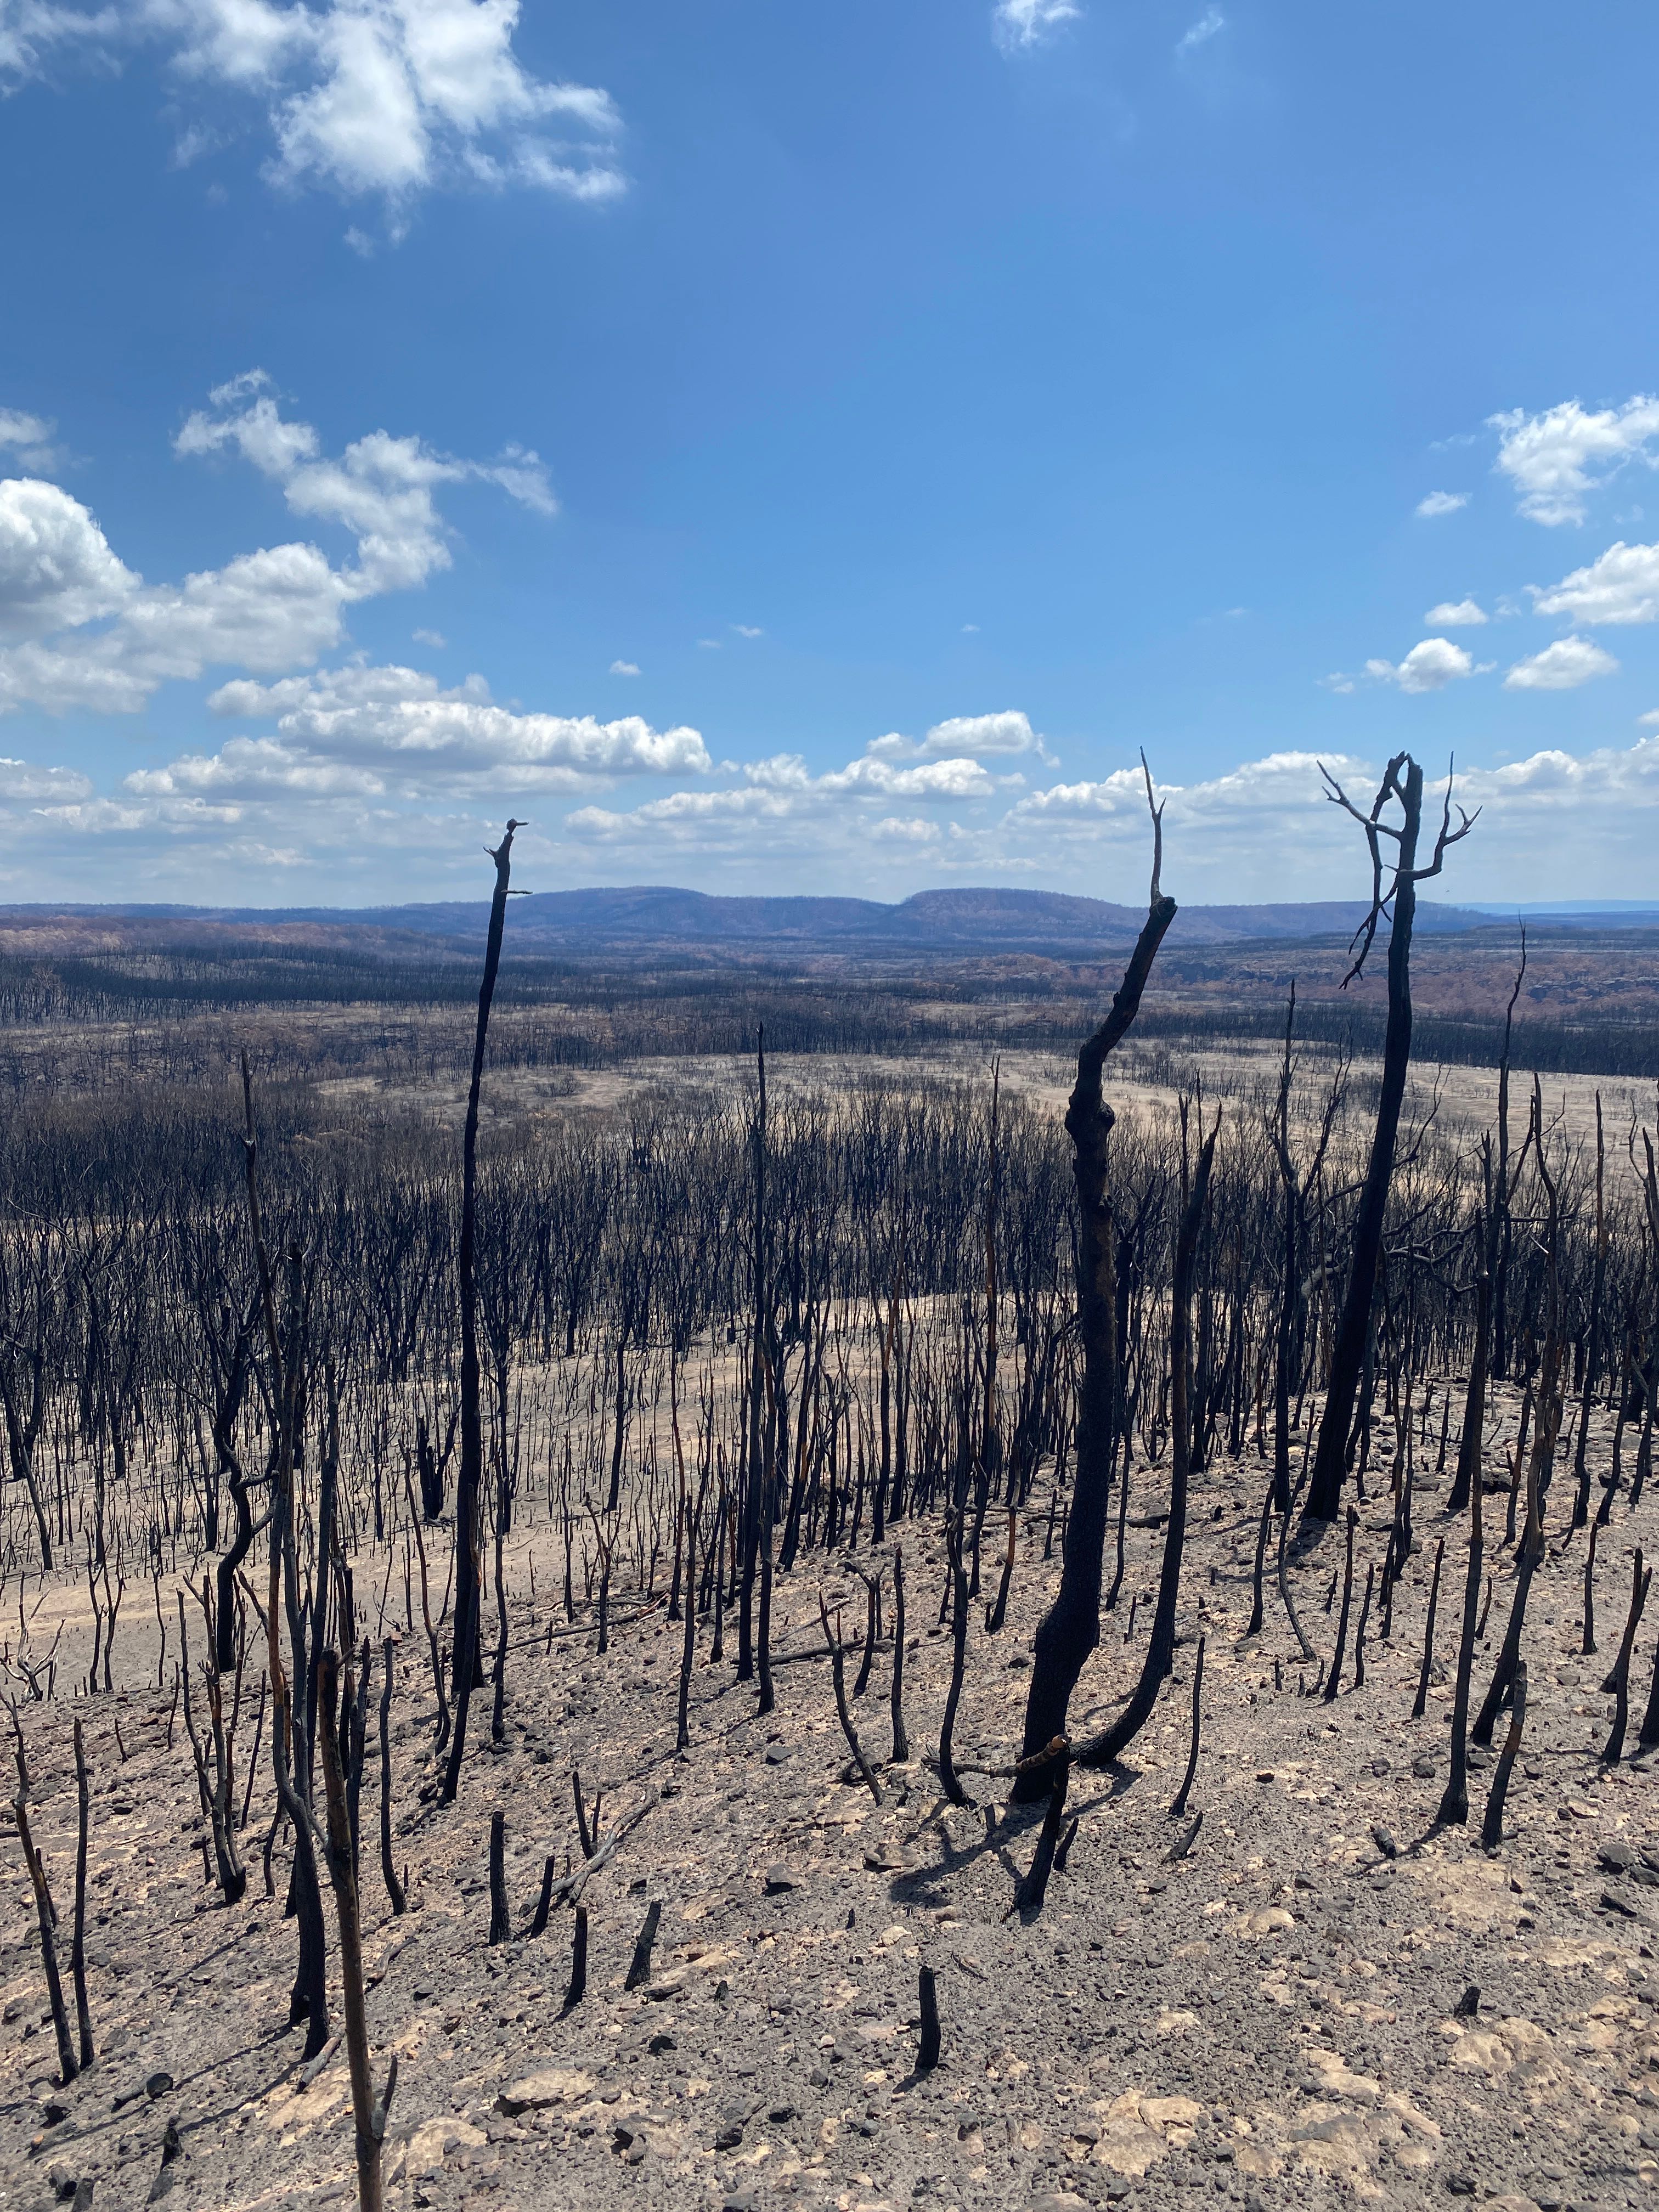 Image of burned trees